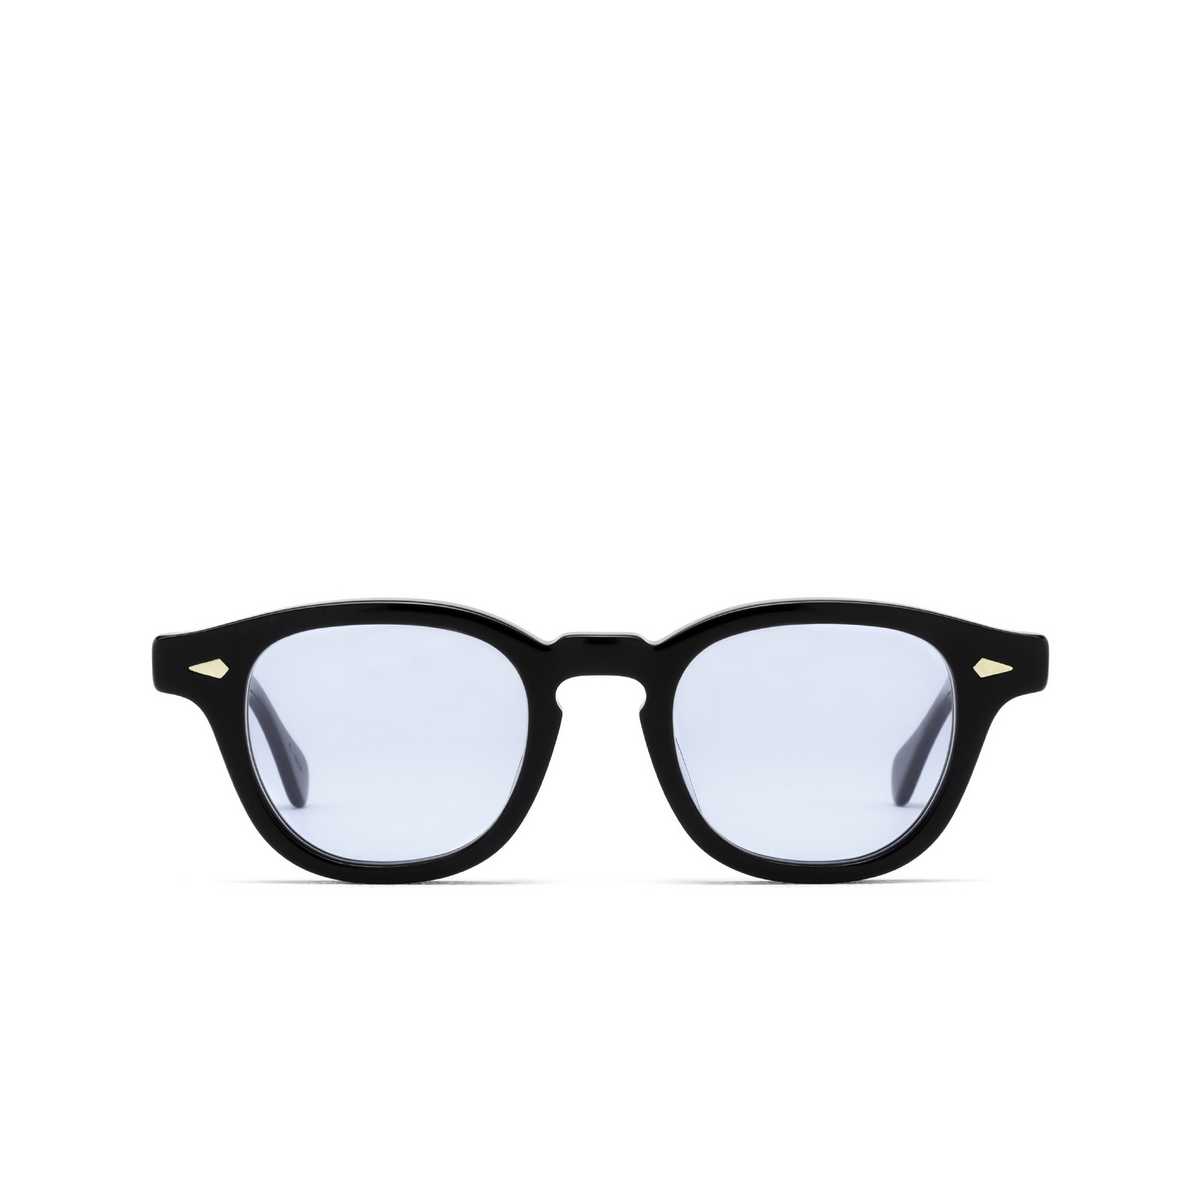 Julius Tart Optical® Square Sunglasses: Ar Sun color Black - front view.